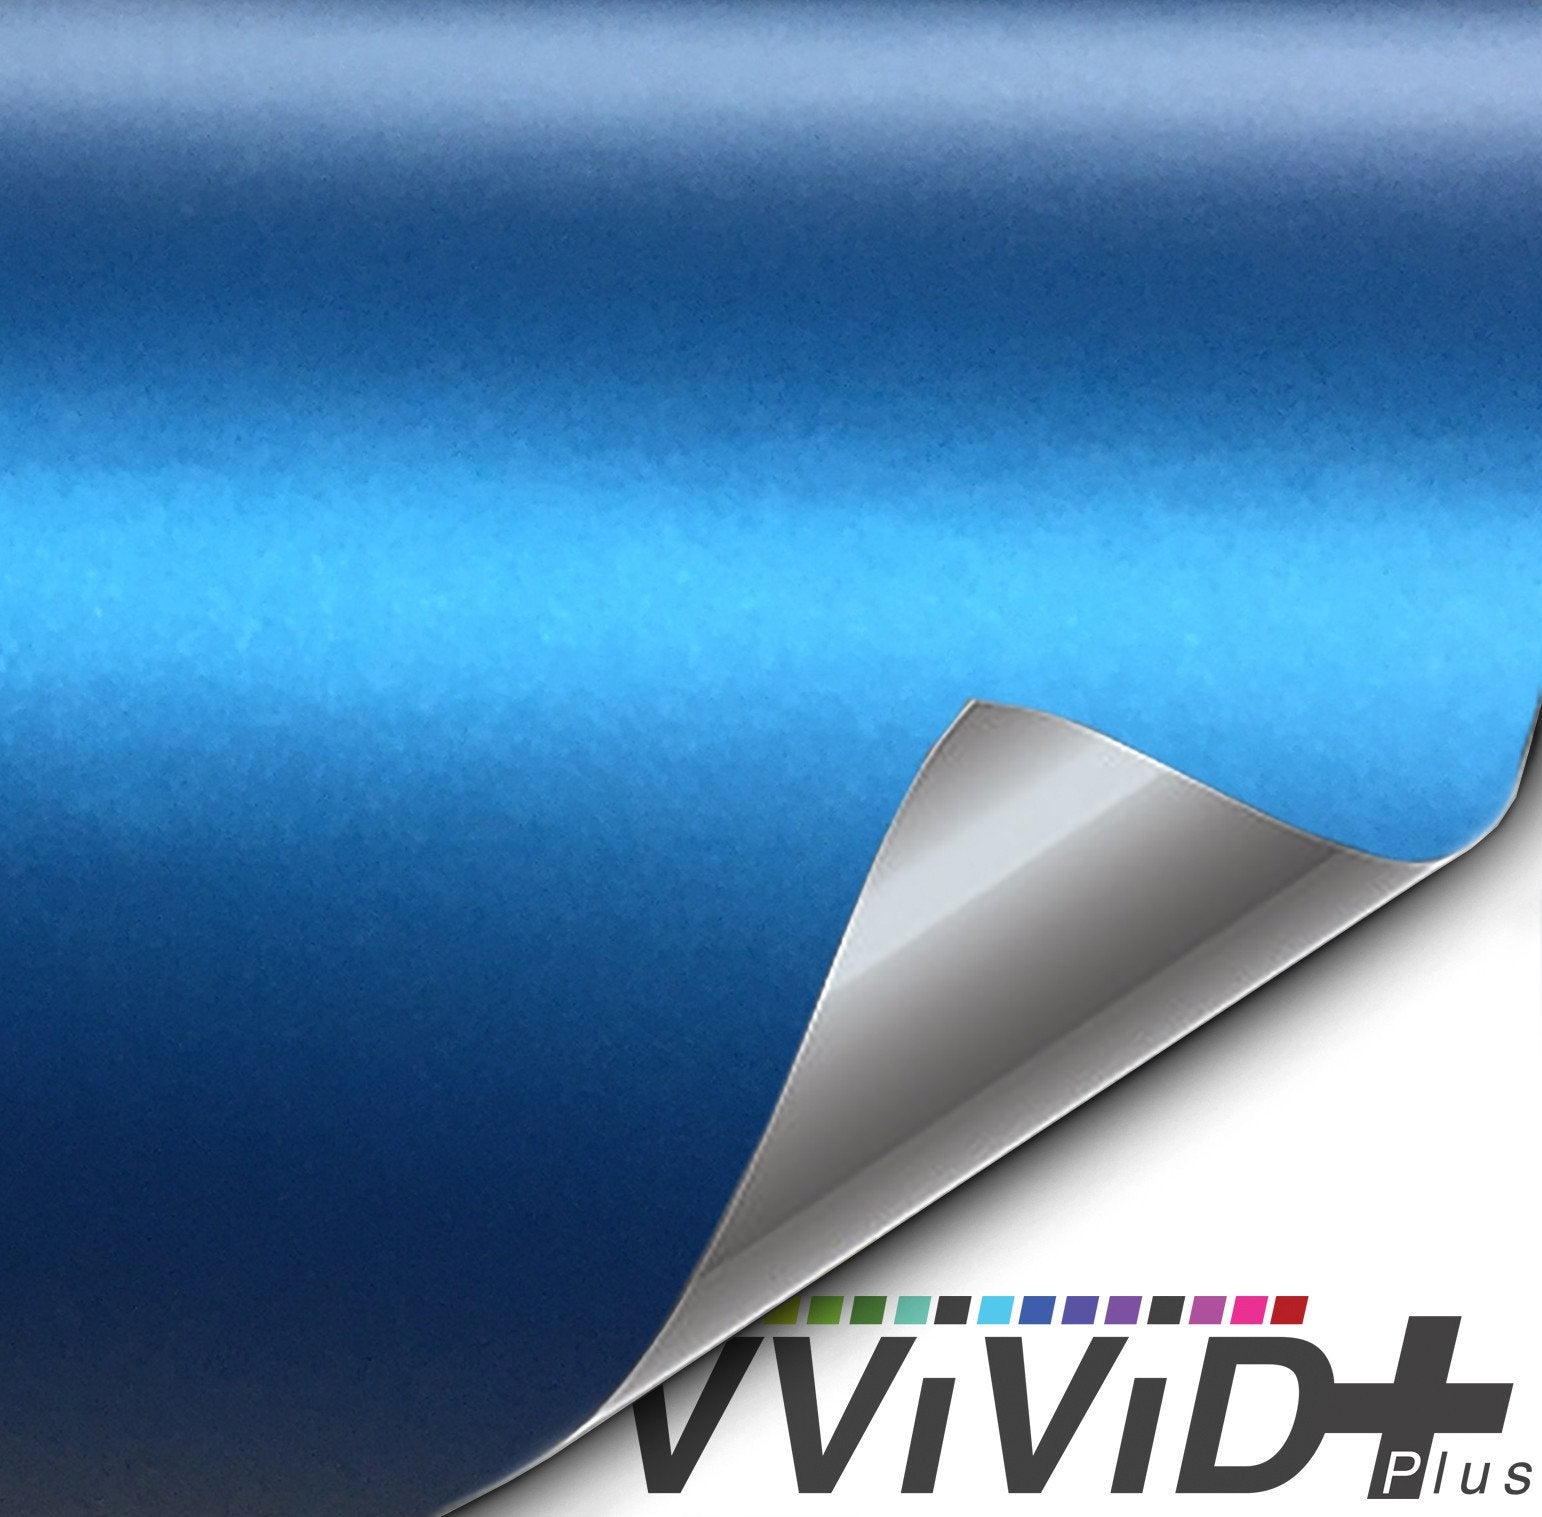 VViViD Gloss Chrome Silver Vinyl Wrap Adhesive Film Roll Air Release DIY Decal Sheet (12 inch x 60 inch)